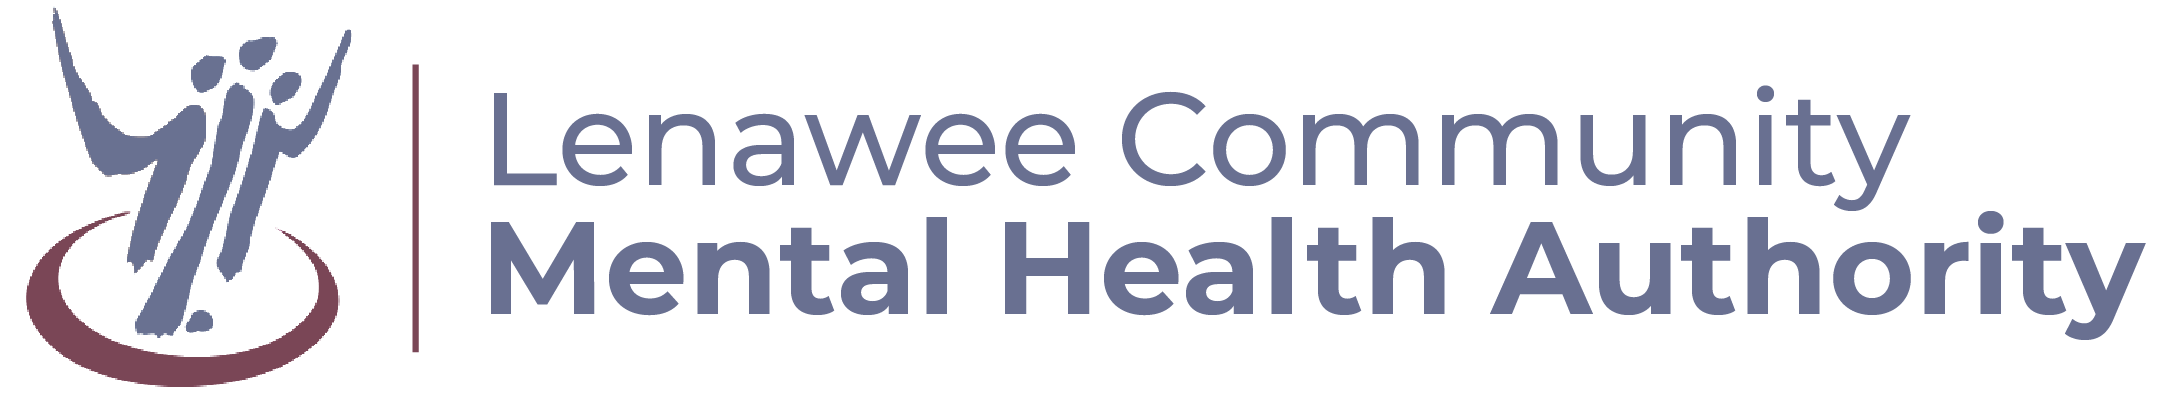 Lenawee Community Mental Health Authority